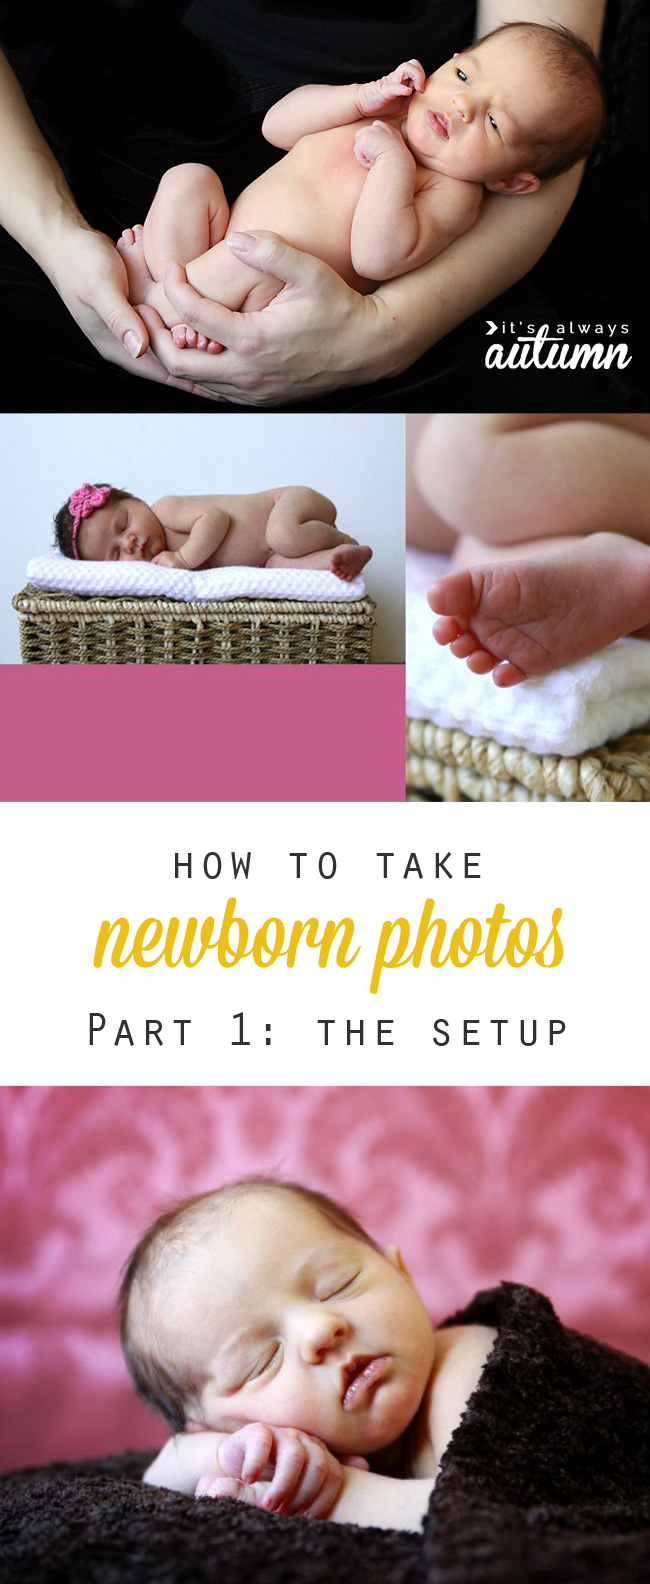 Collage of newborn baby photos